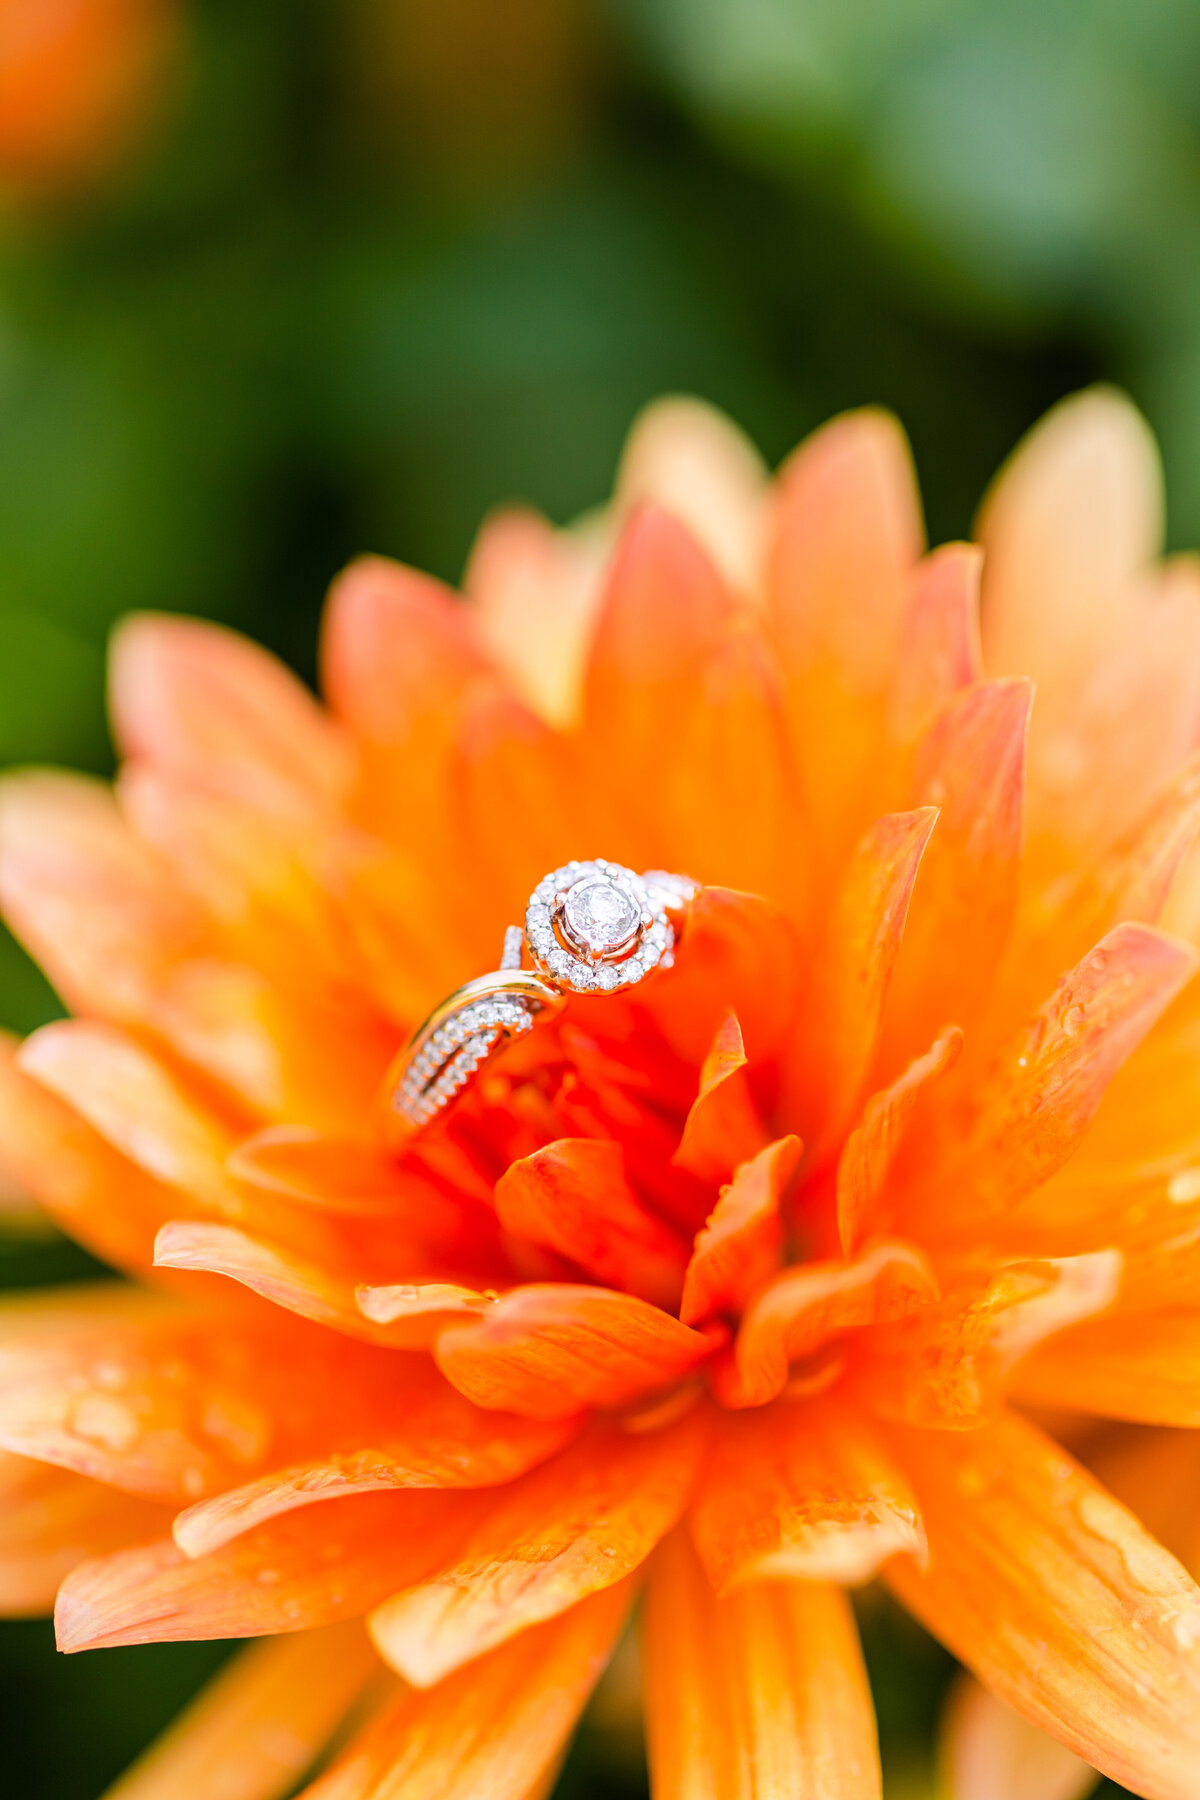 engagement ring macro shot with orange flower